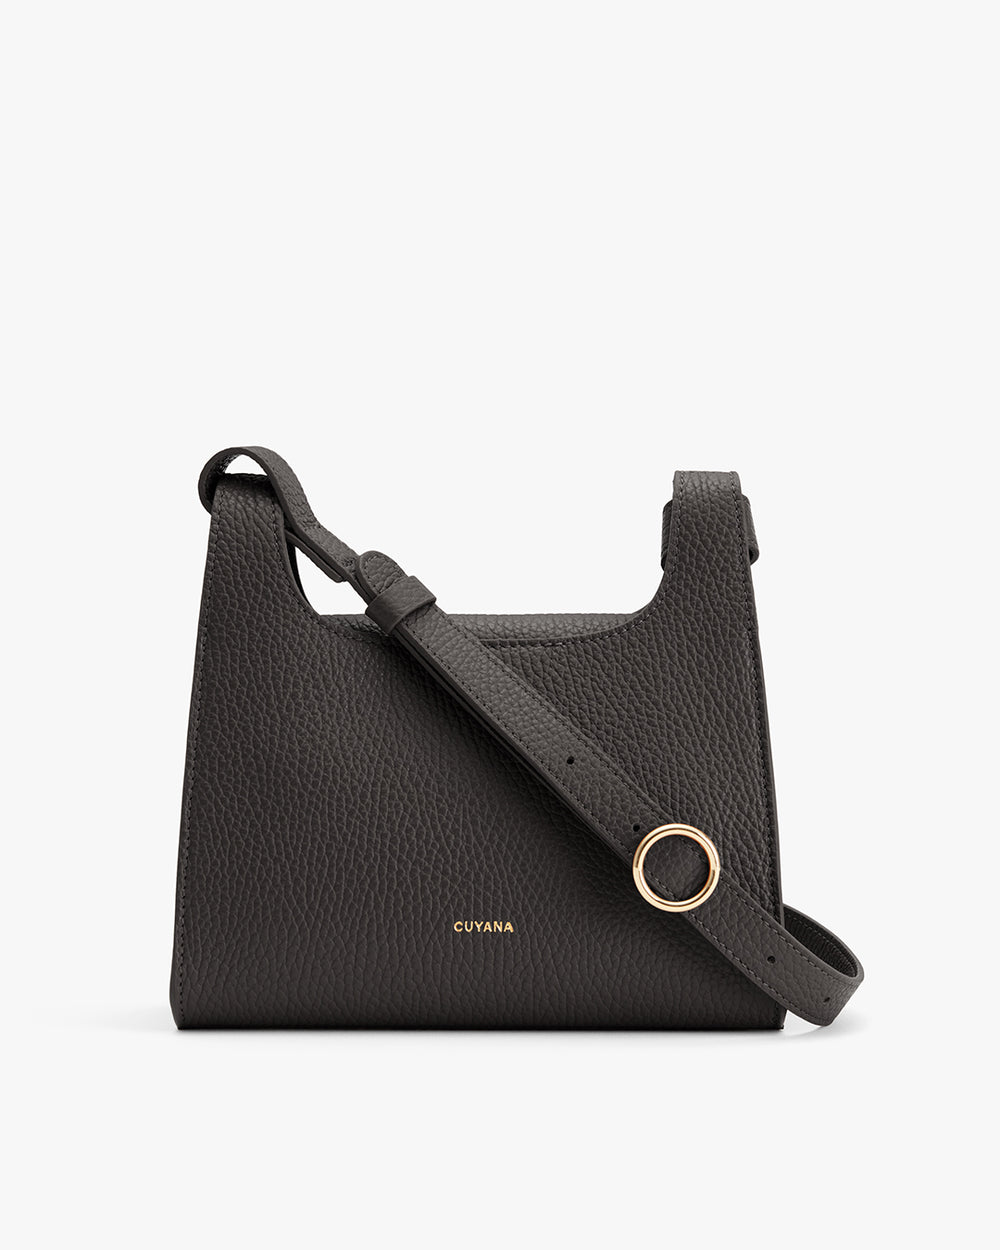 Handbag with a shoulder strap and a circular accent.